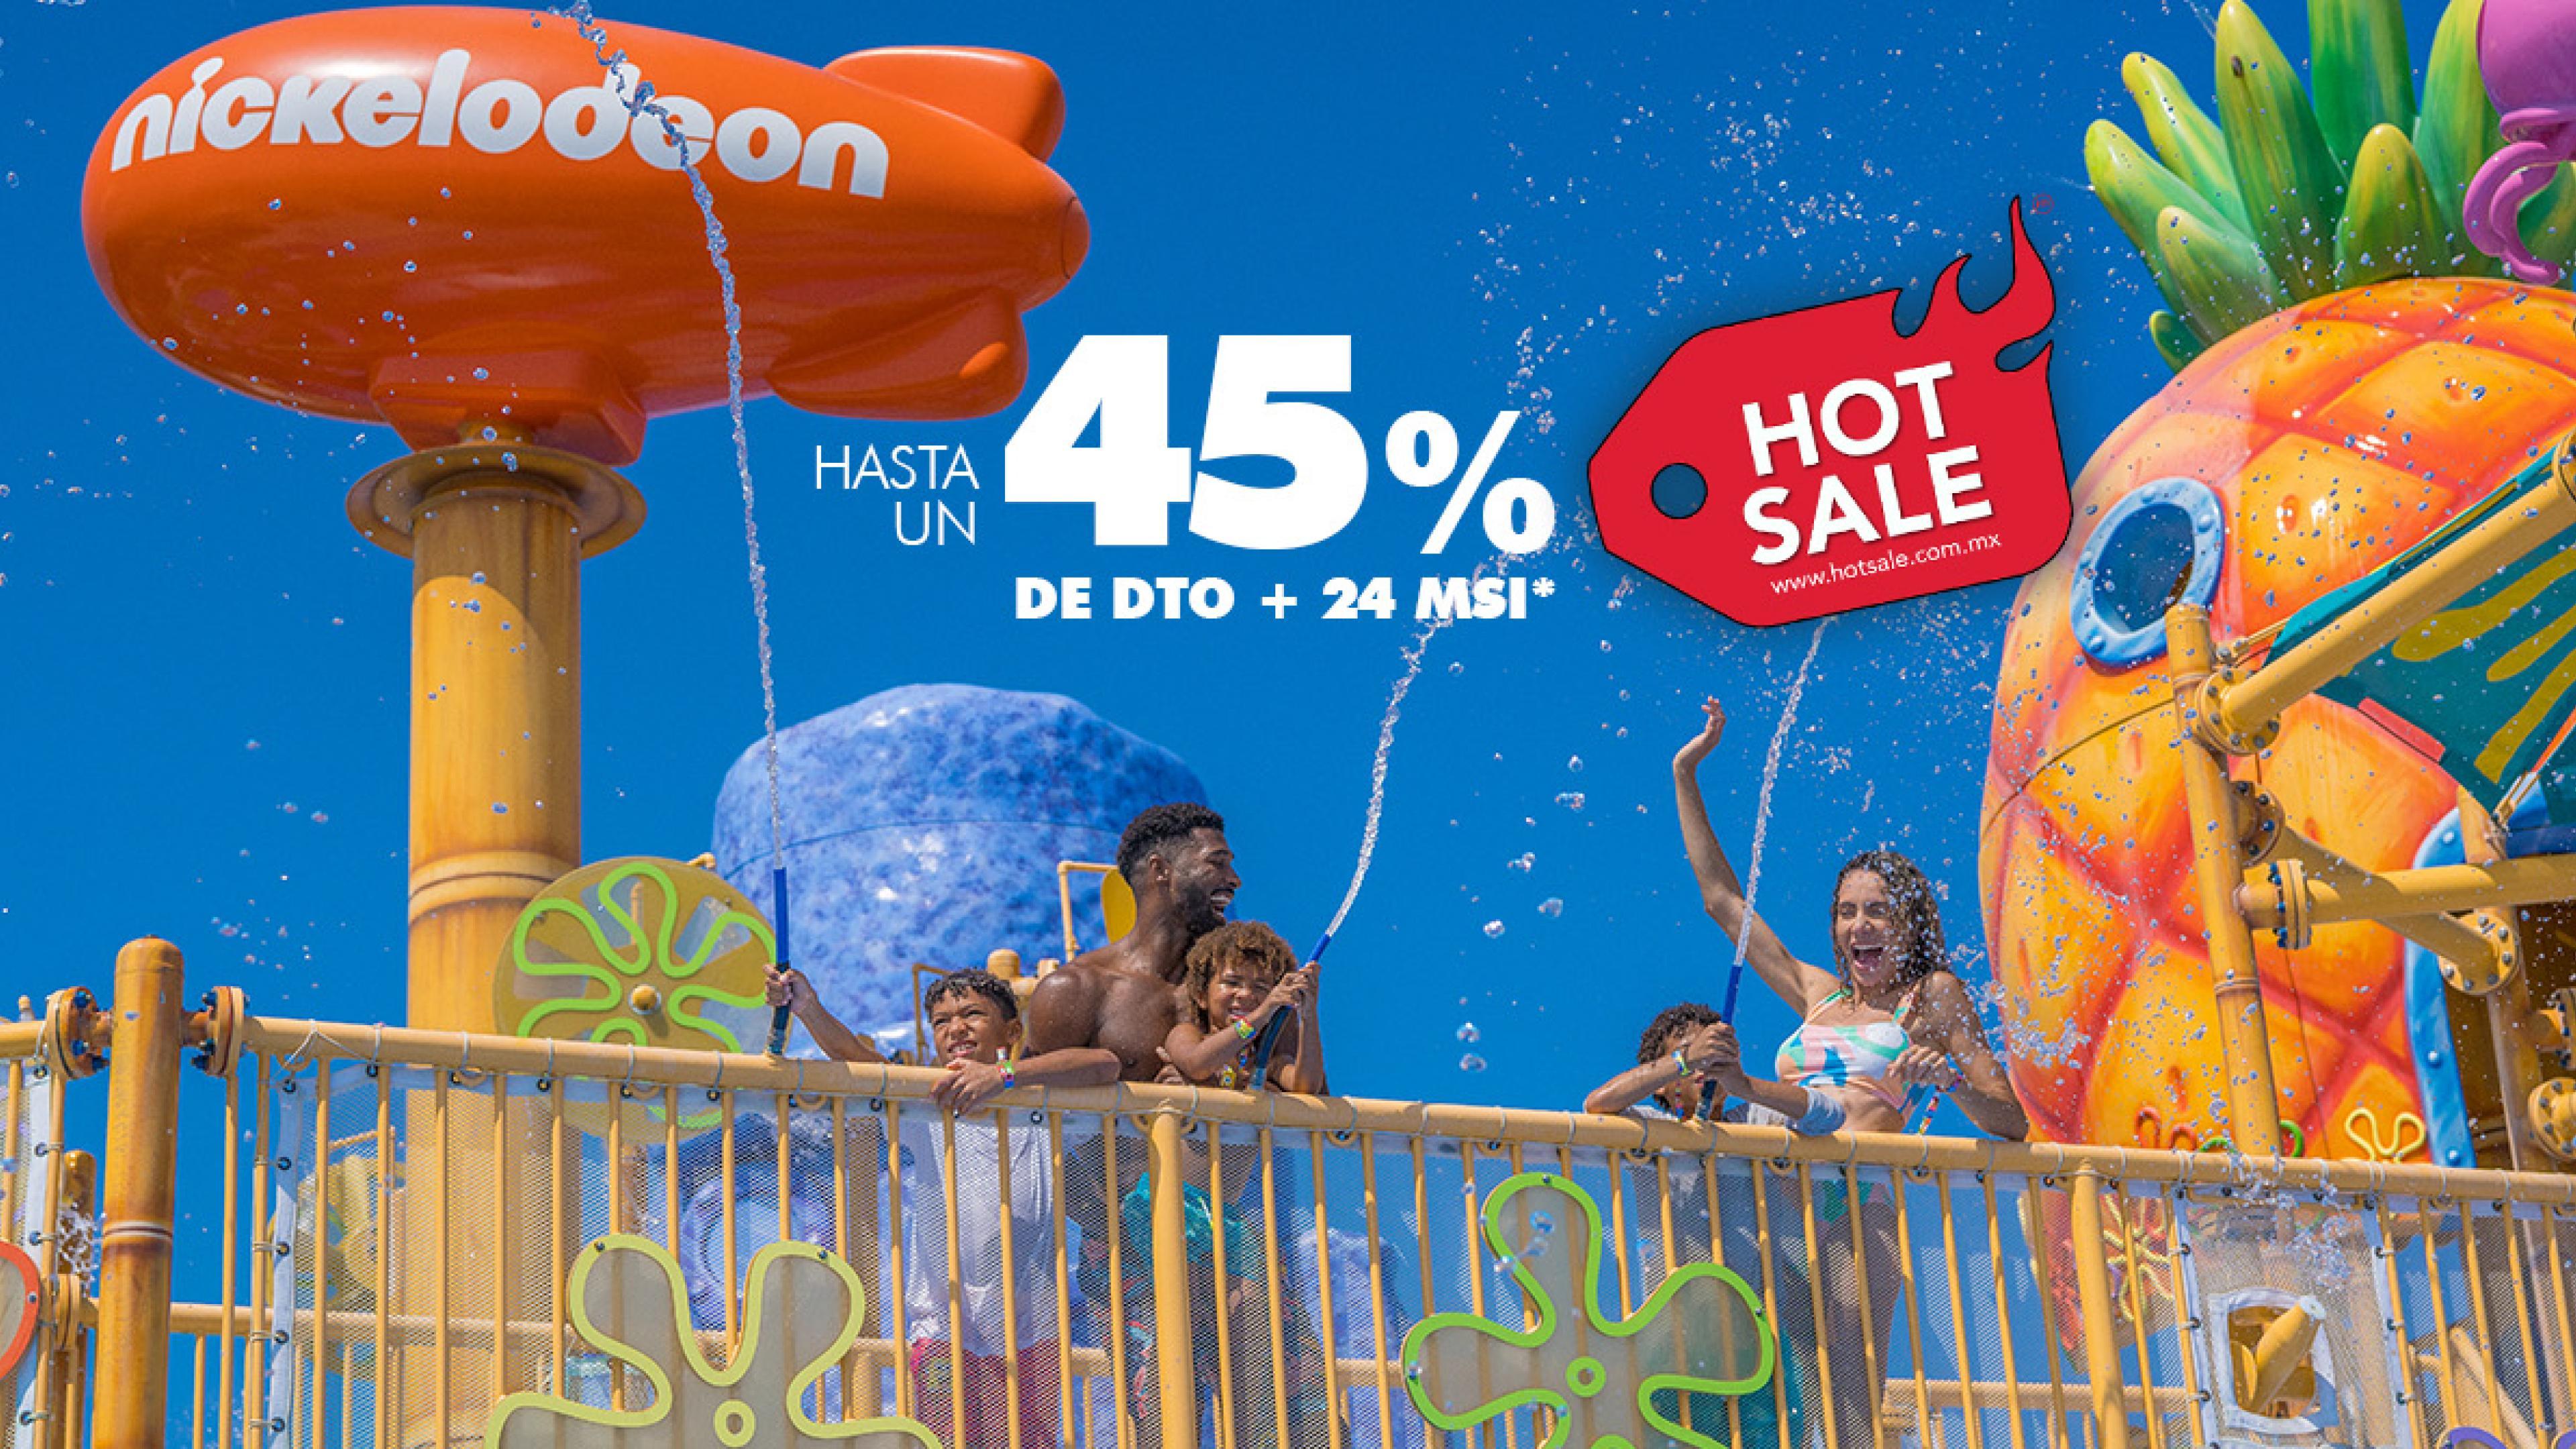 Hot Sale MX Bannereon Nickelodeon